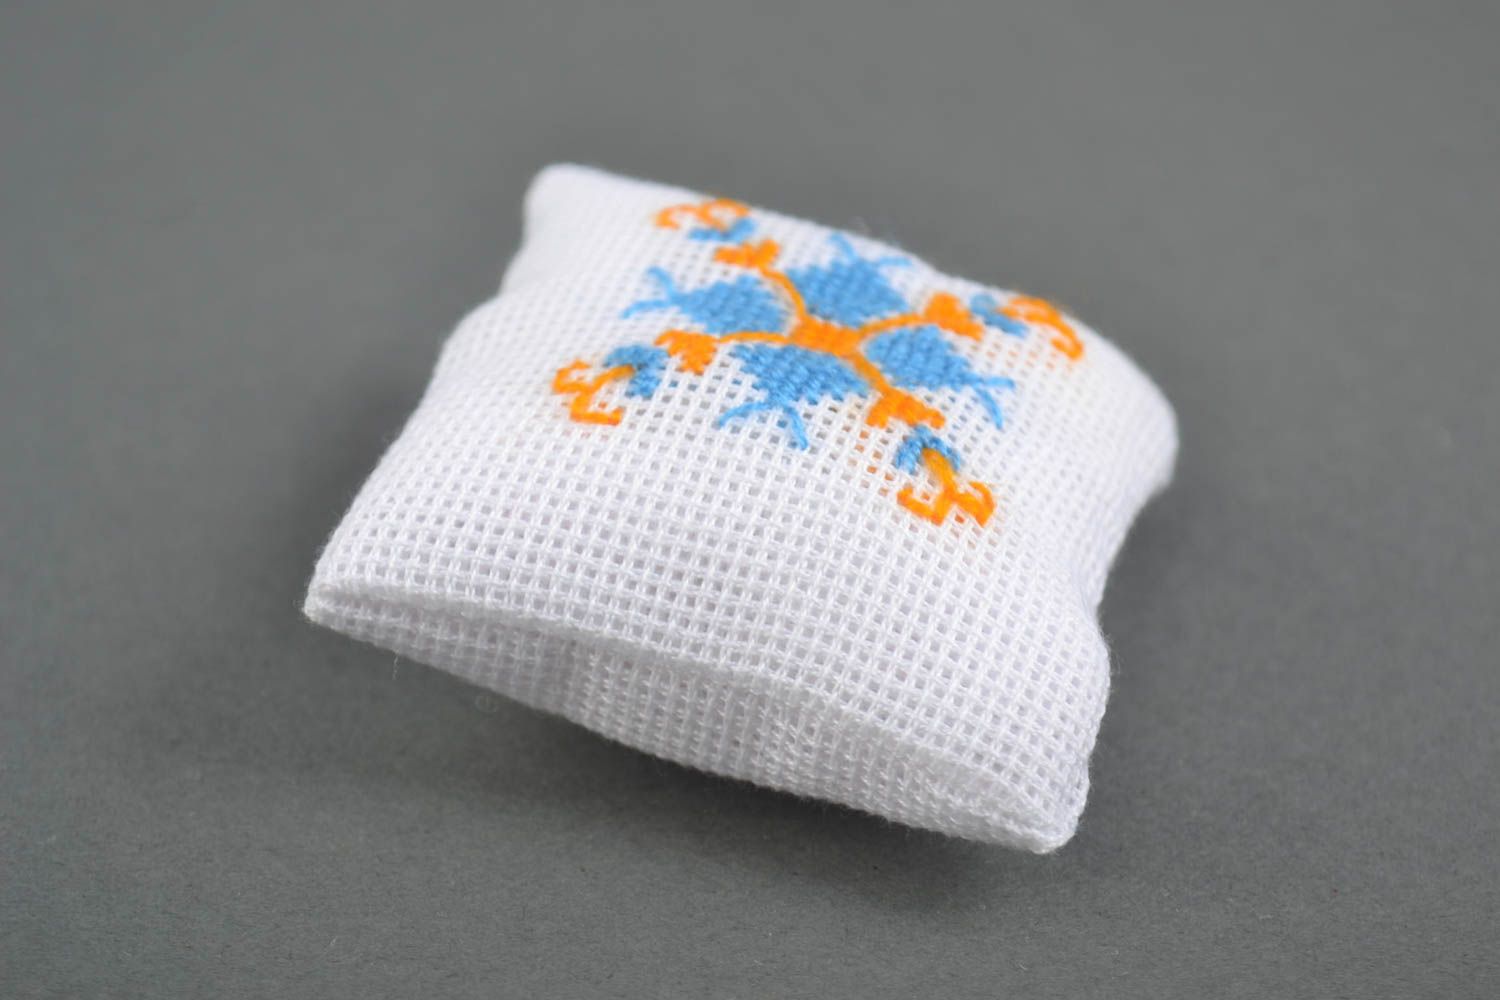 Handmade pincushion sewing accessories pin cushion embroidery supplies  photo 2